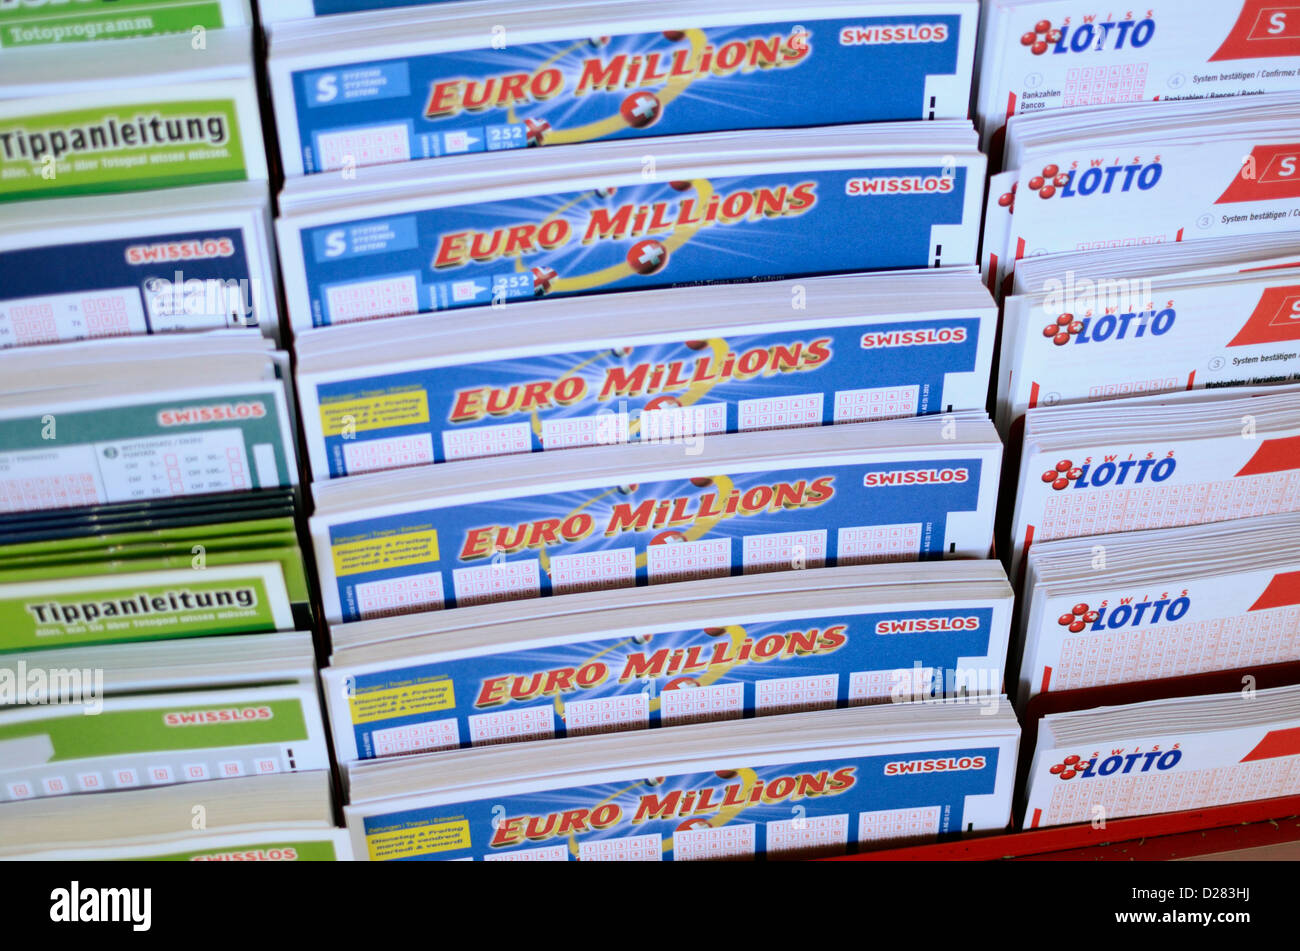 Euro Millions lottery tickets, Basel, Switzerland Stock Photo